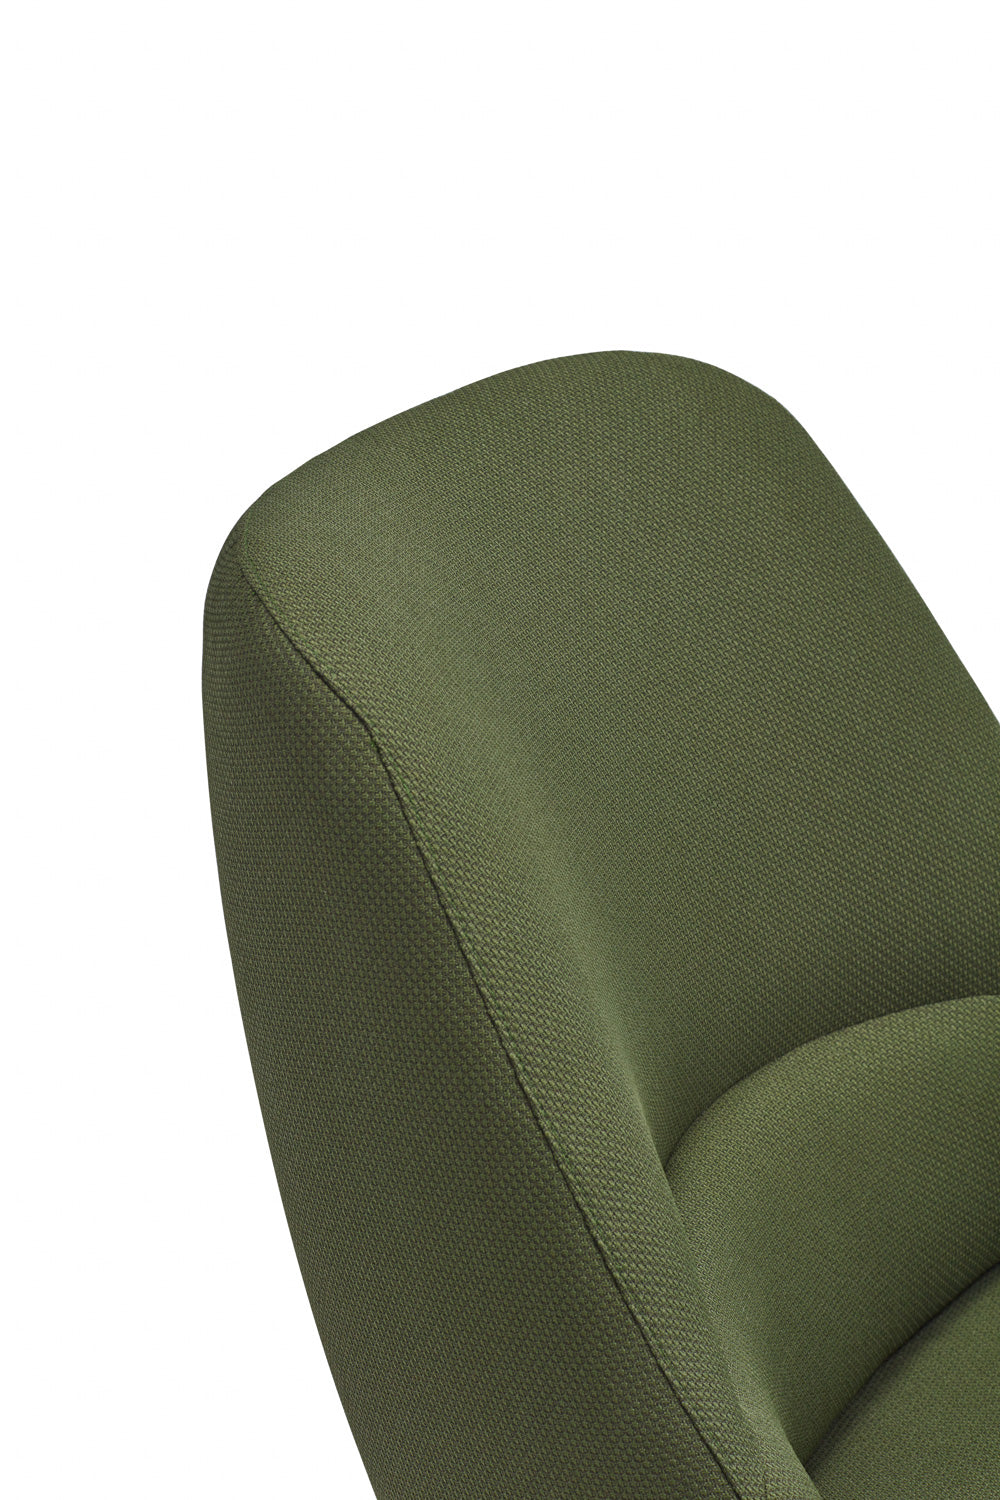 DINS armchair dark green